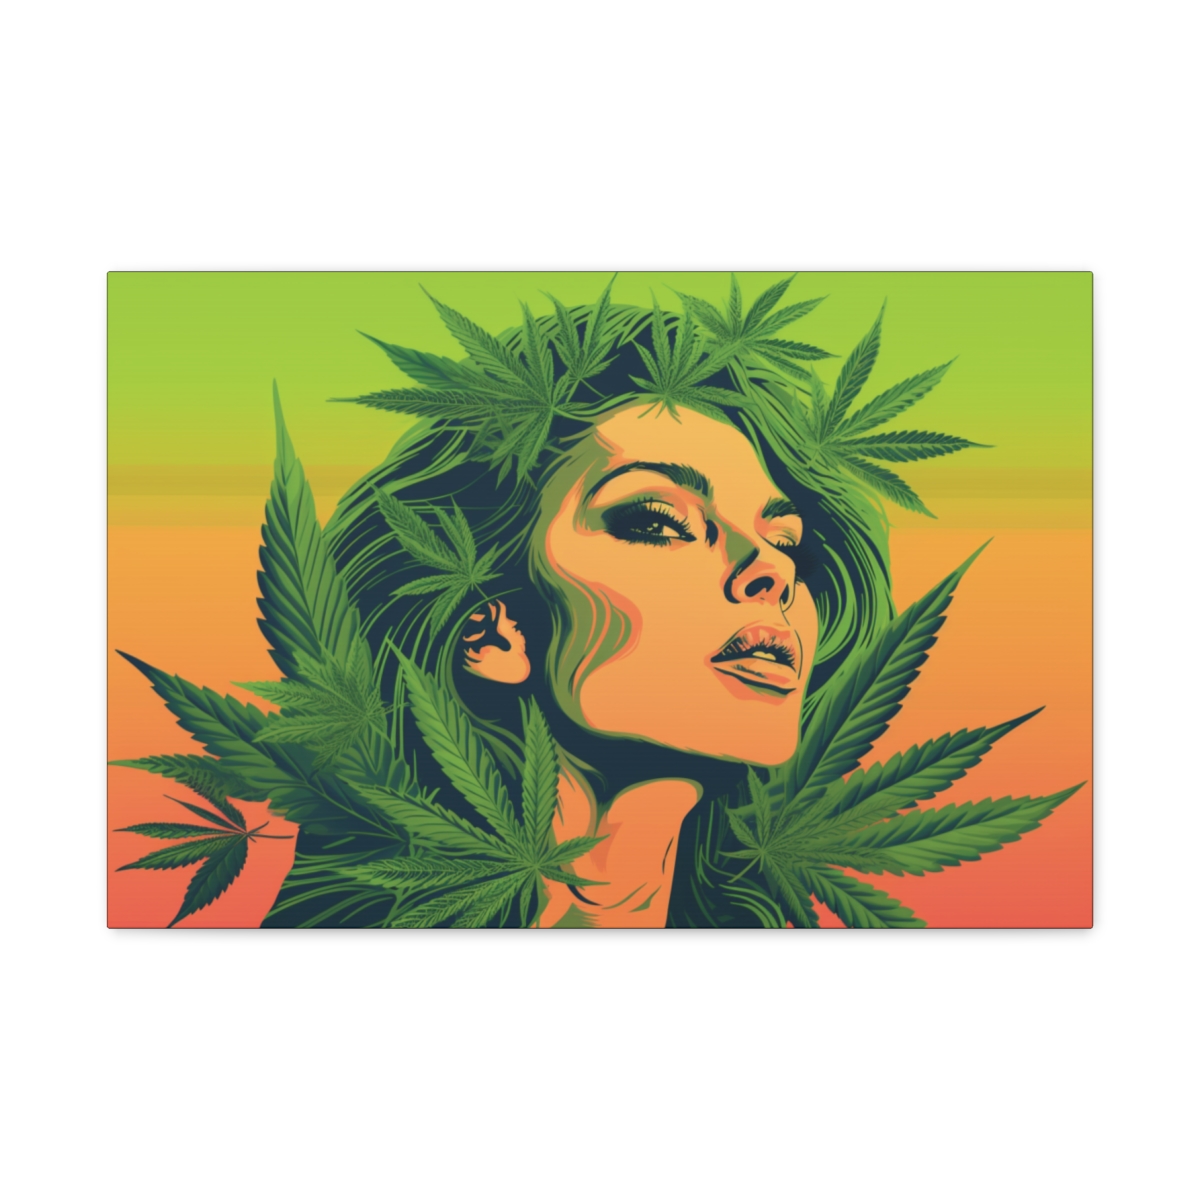 Weed Girl Art: Smoke N Chill